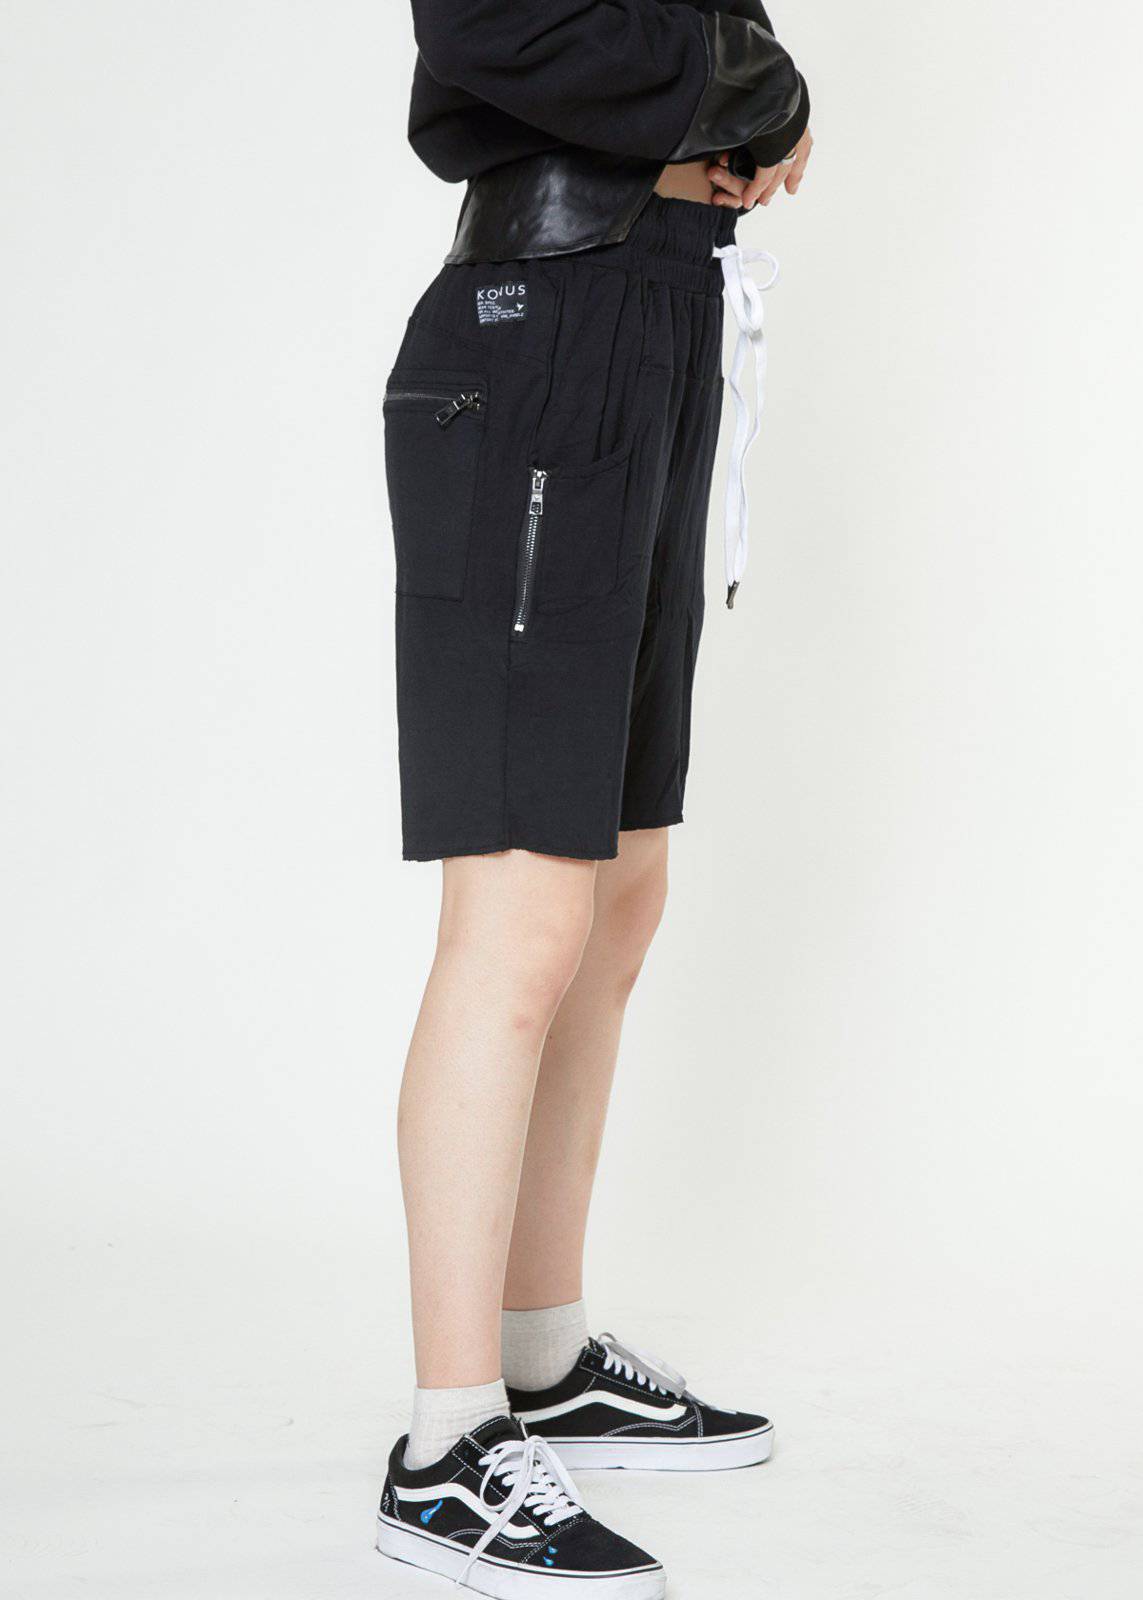 Konus Men's Drop Crotch Shorts With Zipper Pockets in Black by Shop at Konus